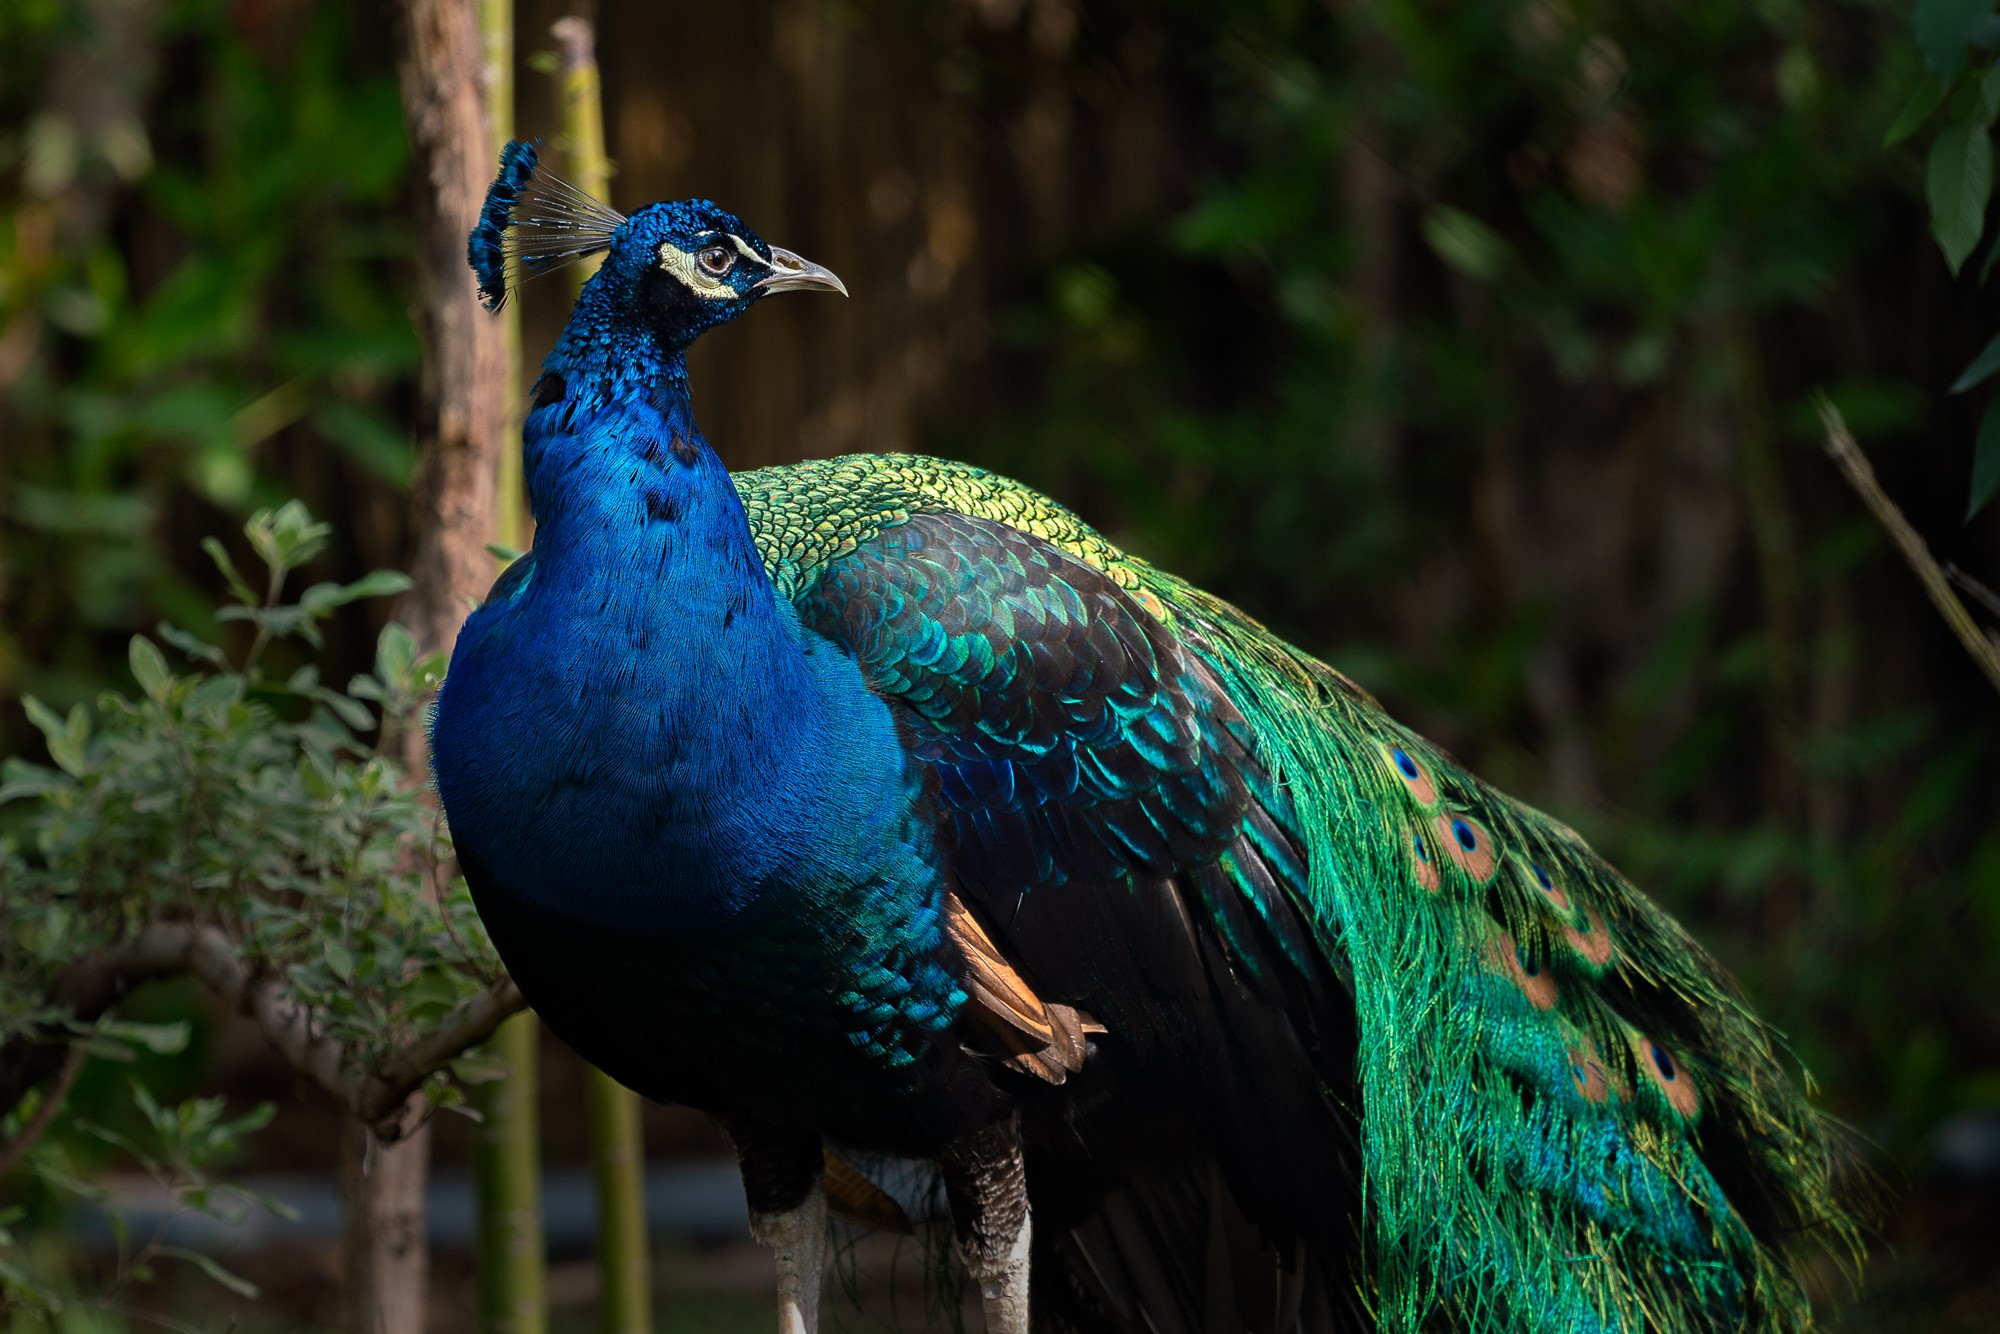 Male peacock boasting its colors